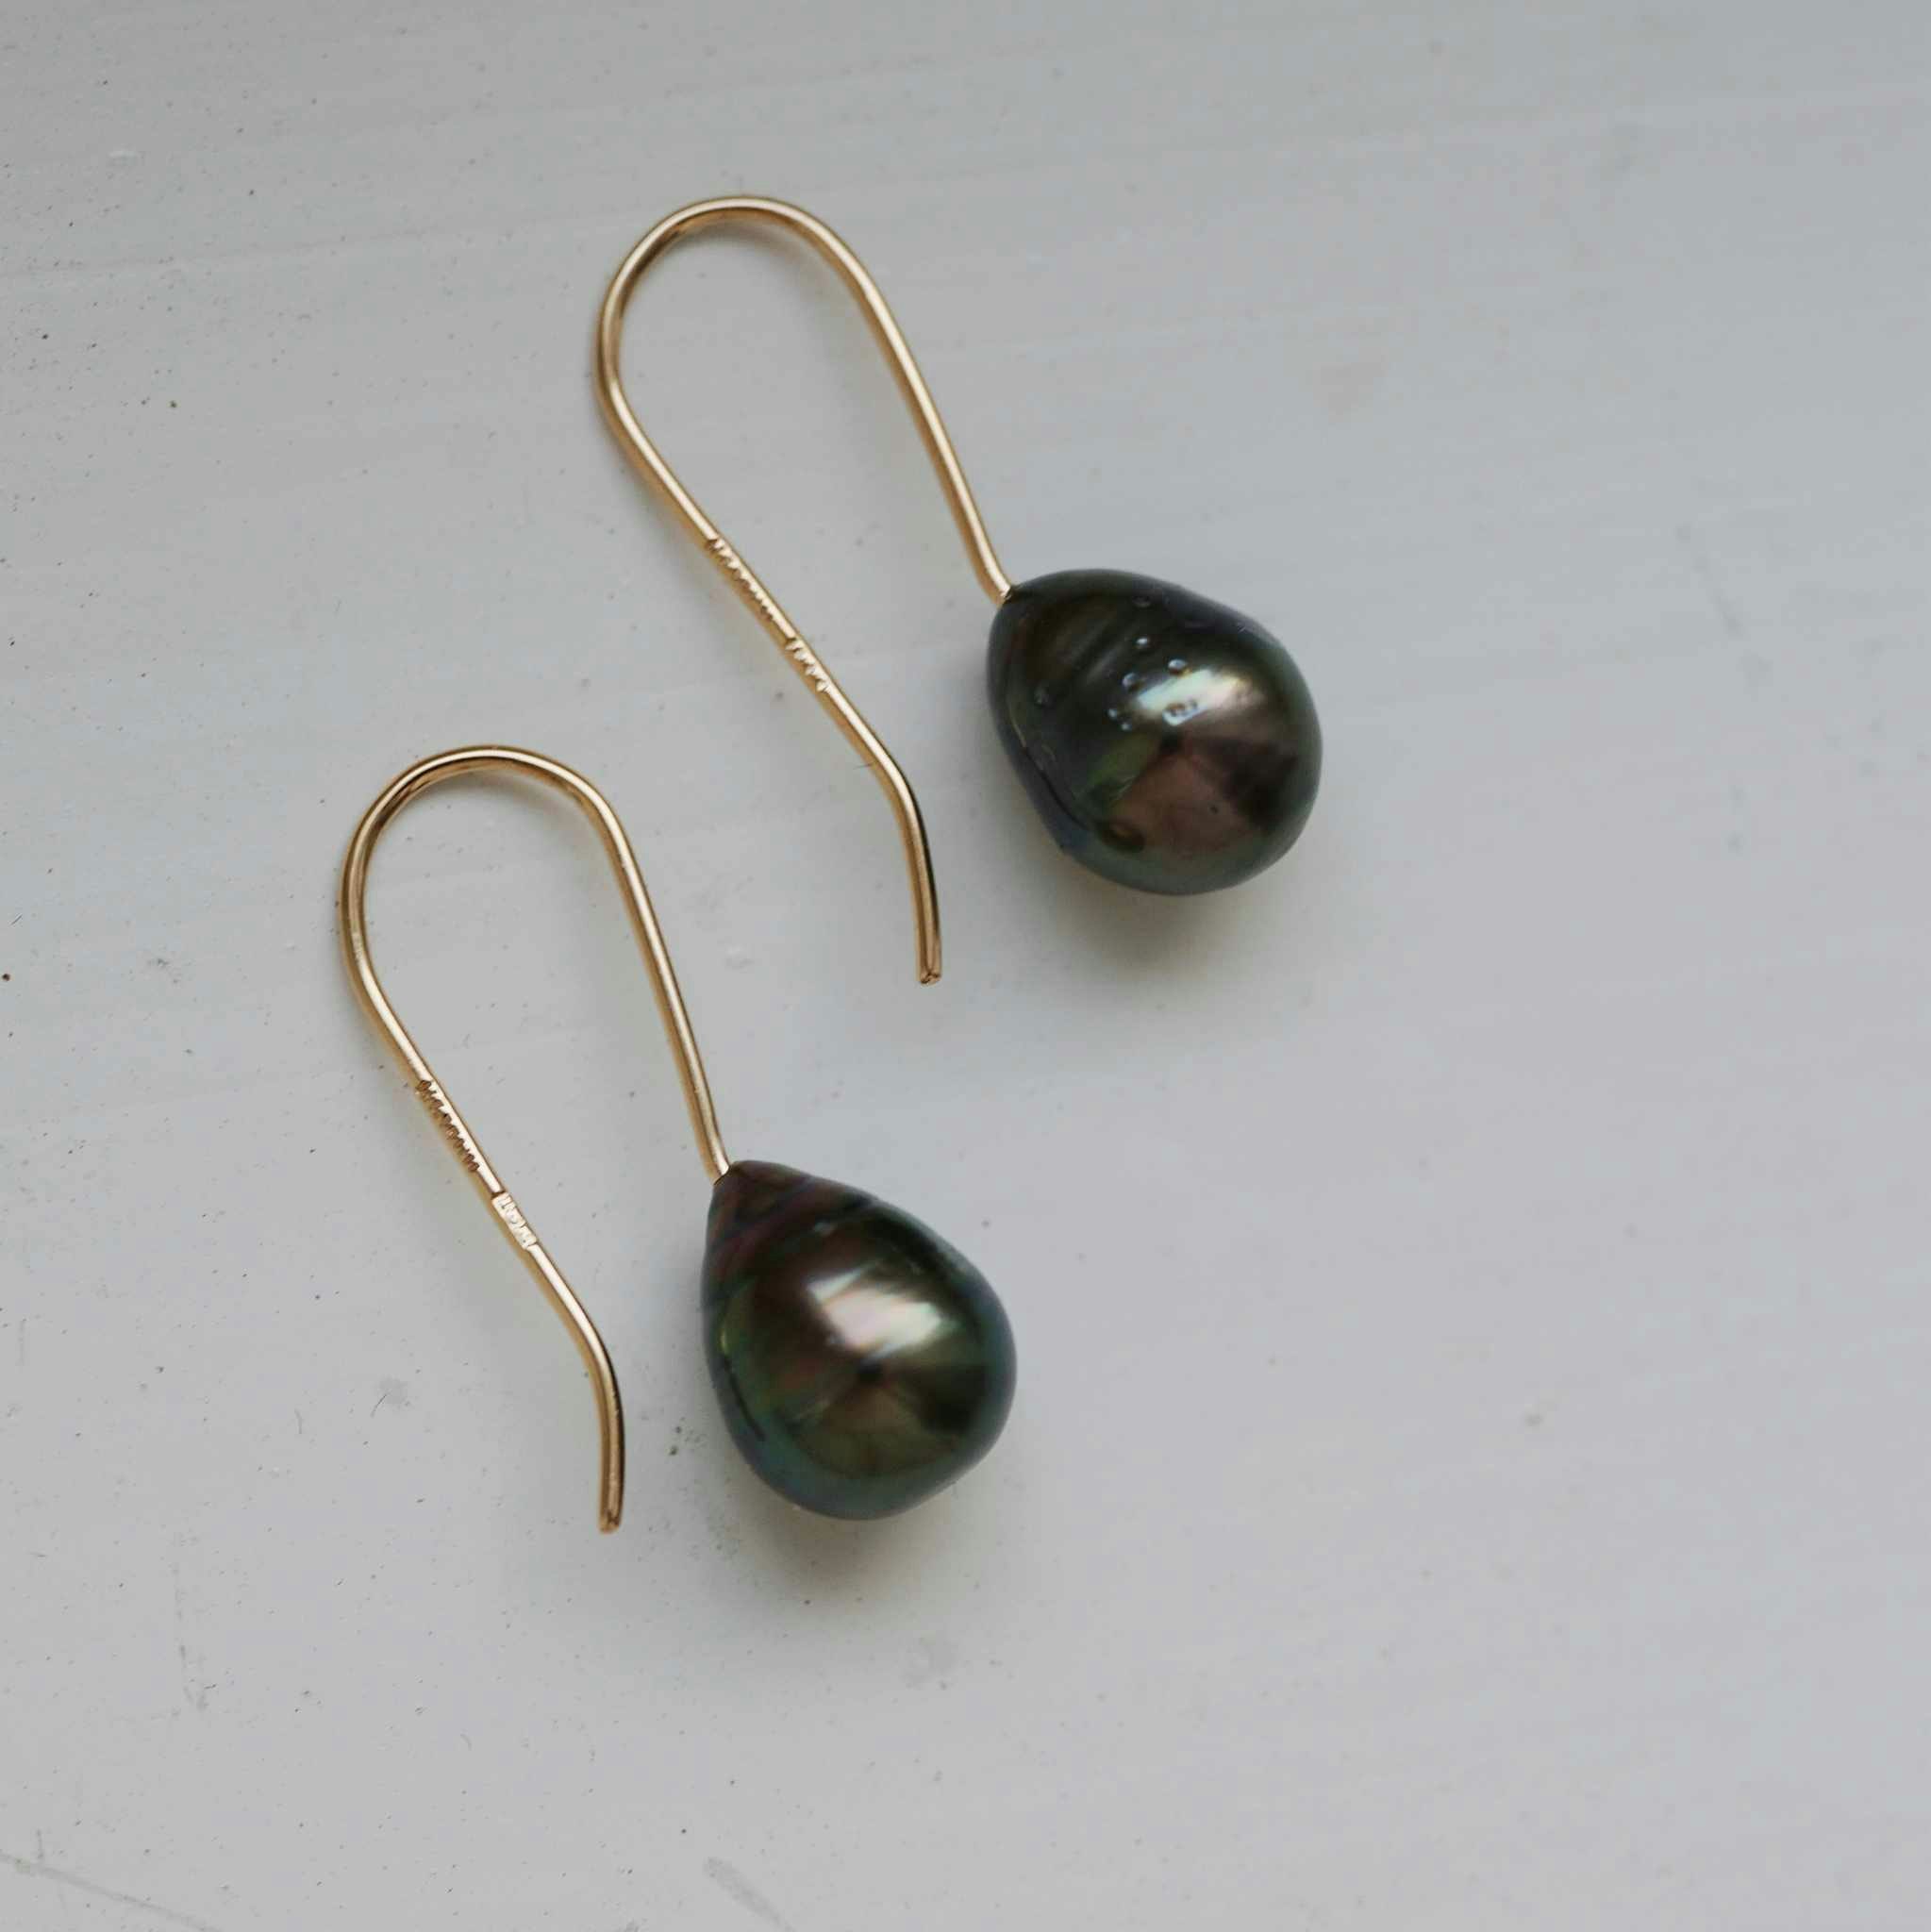 "Long pearl drop" earrings in gold with tahiti pearls